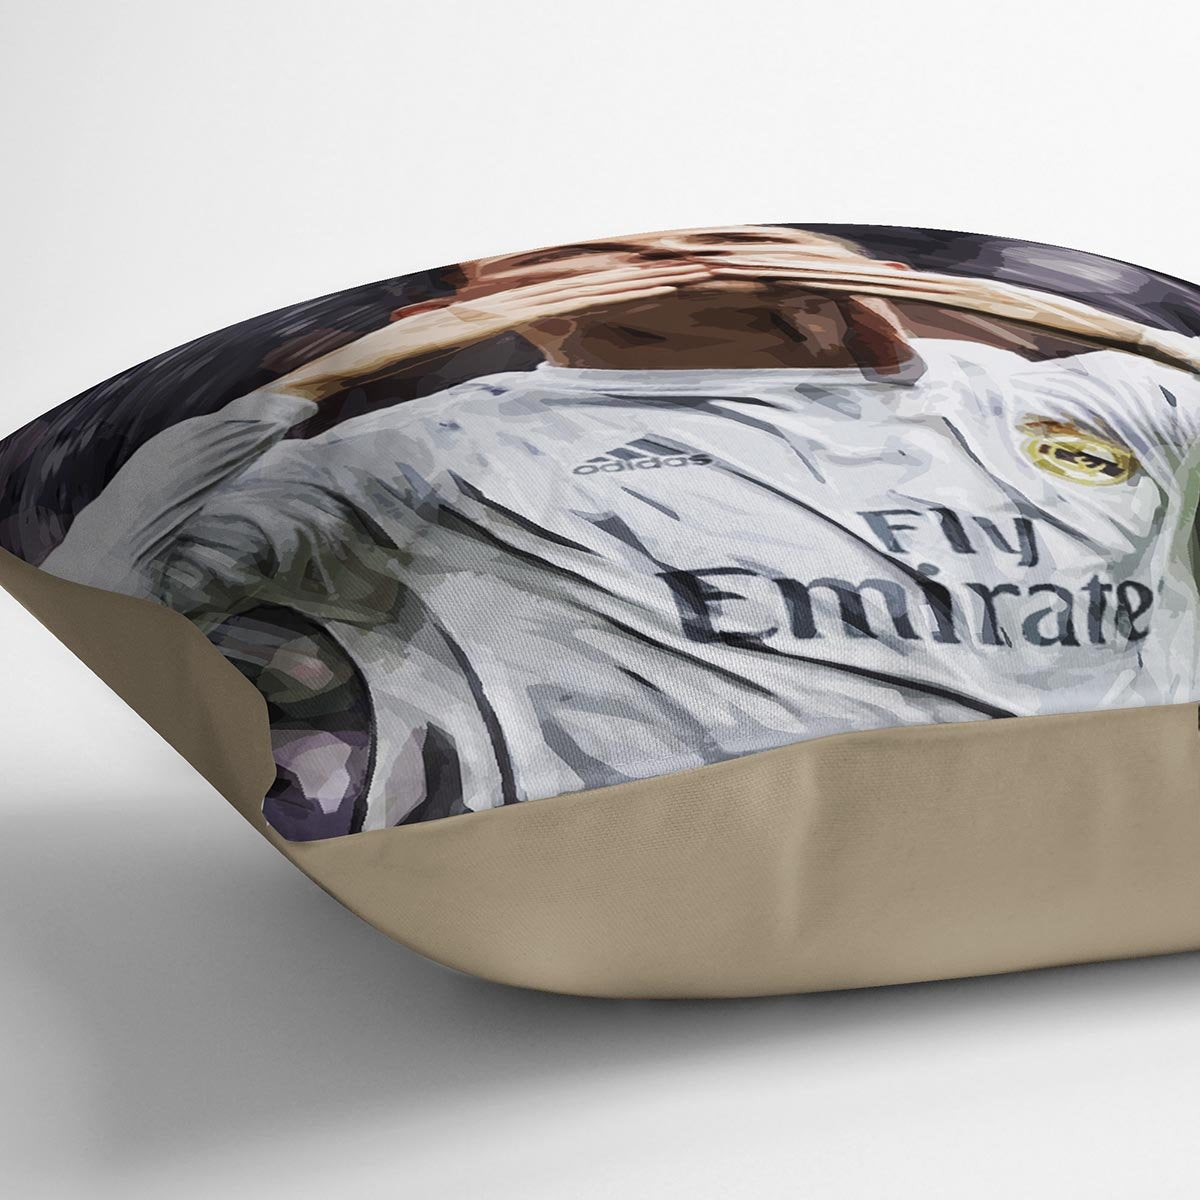 Cristiano Ronaldo Kiss Cushion